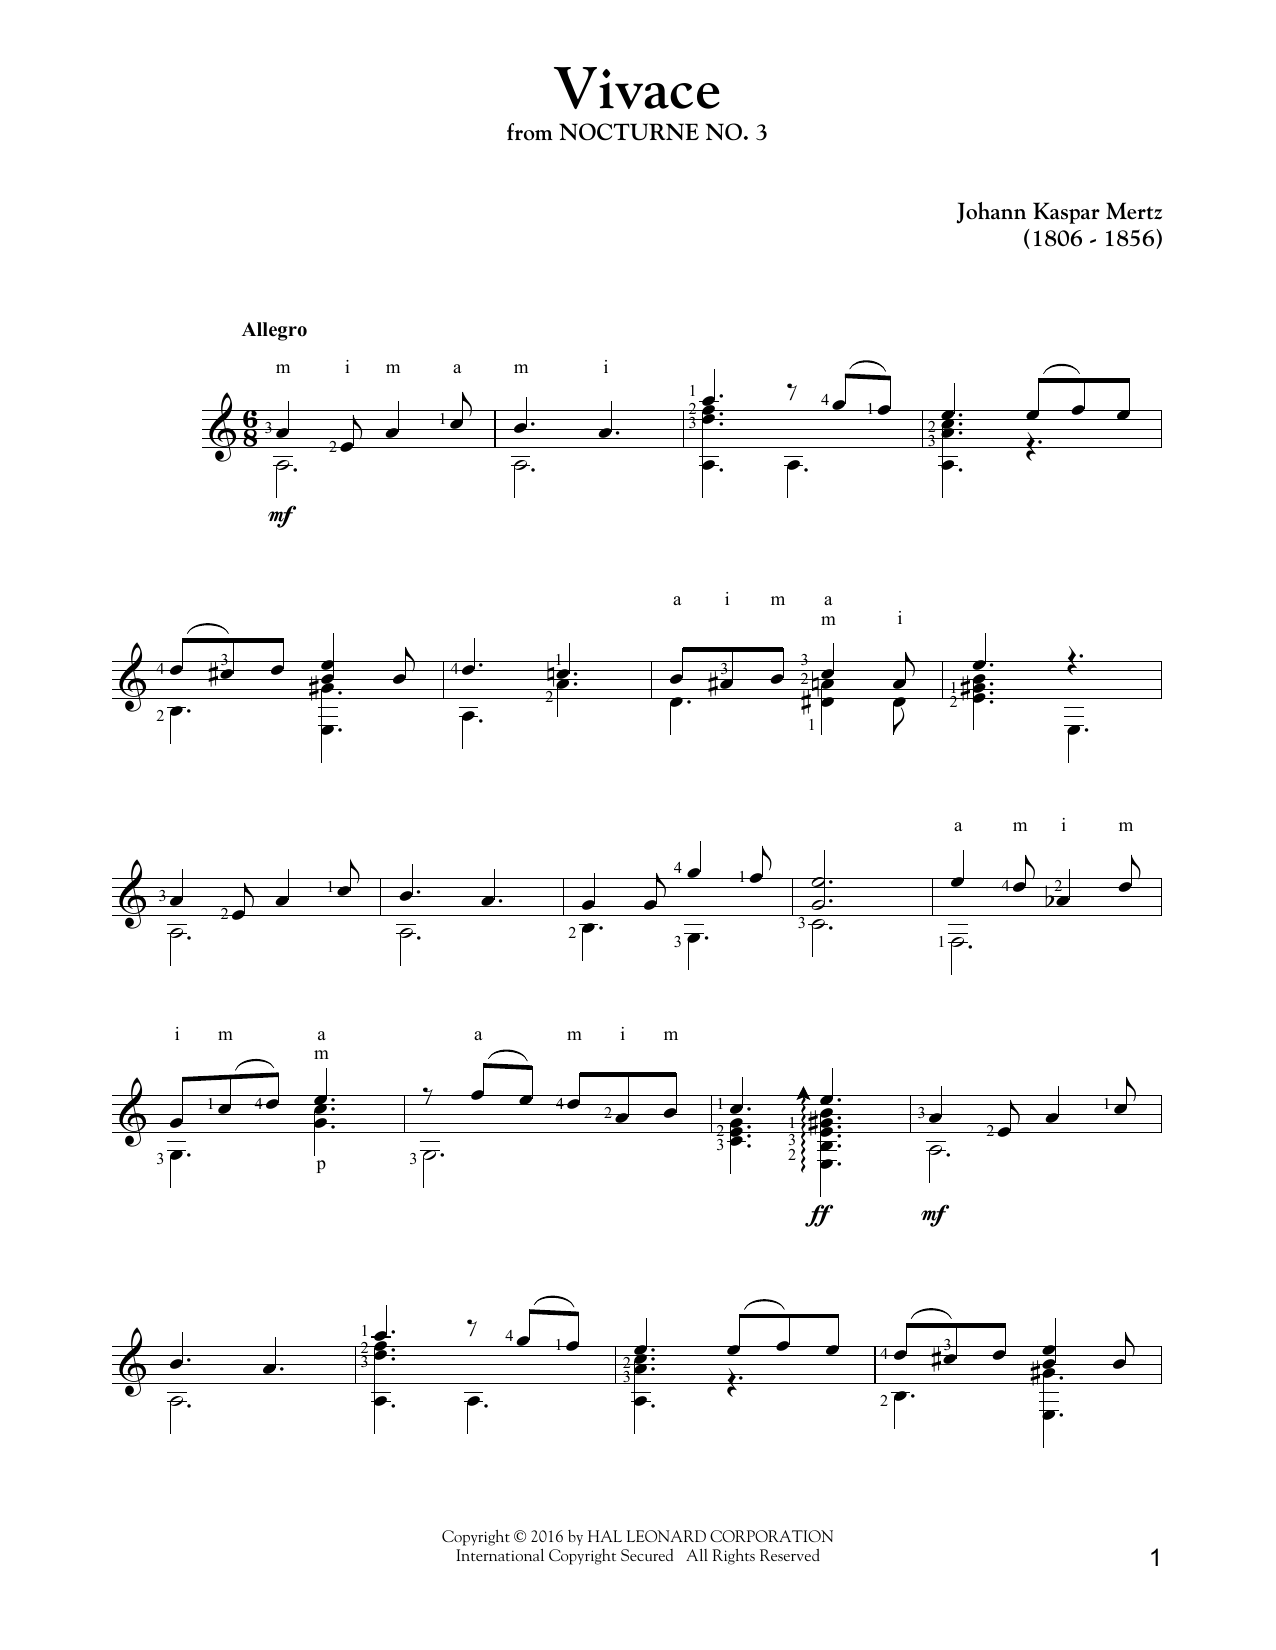 Johann Kaspar Mertz Vivace Sheet Music Notes & Chords for Guitar Tab - Download or Print PDF